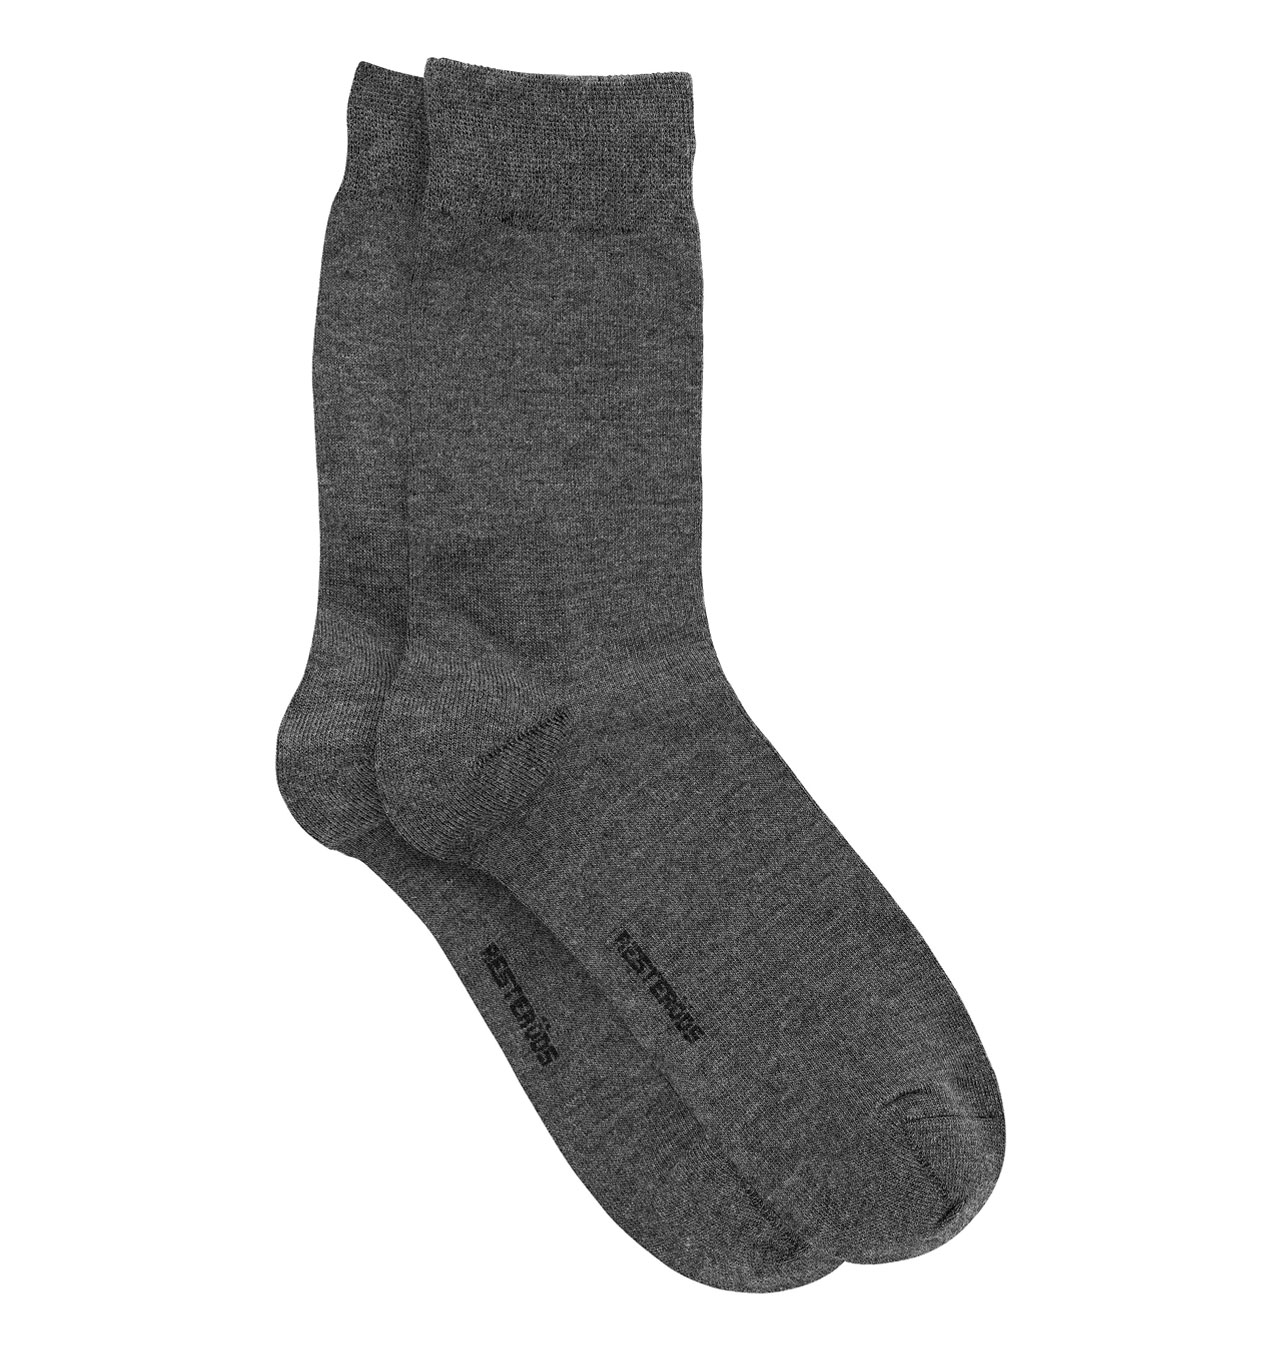 Resteröds - Bamboo Socks 5-pack - Dark Grey